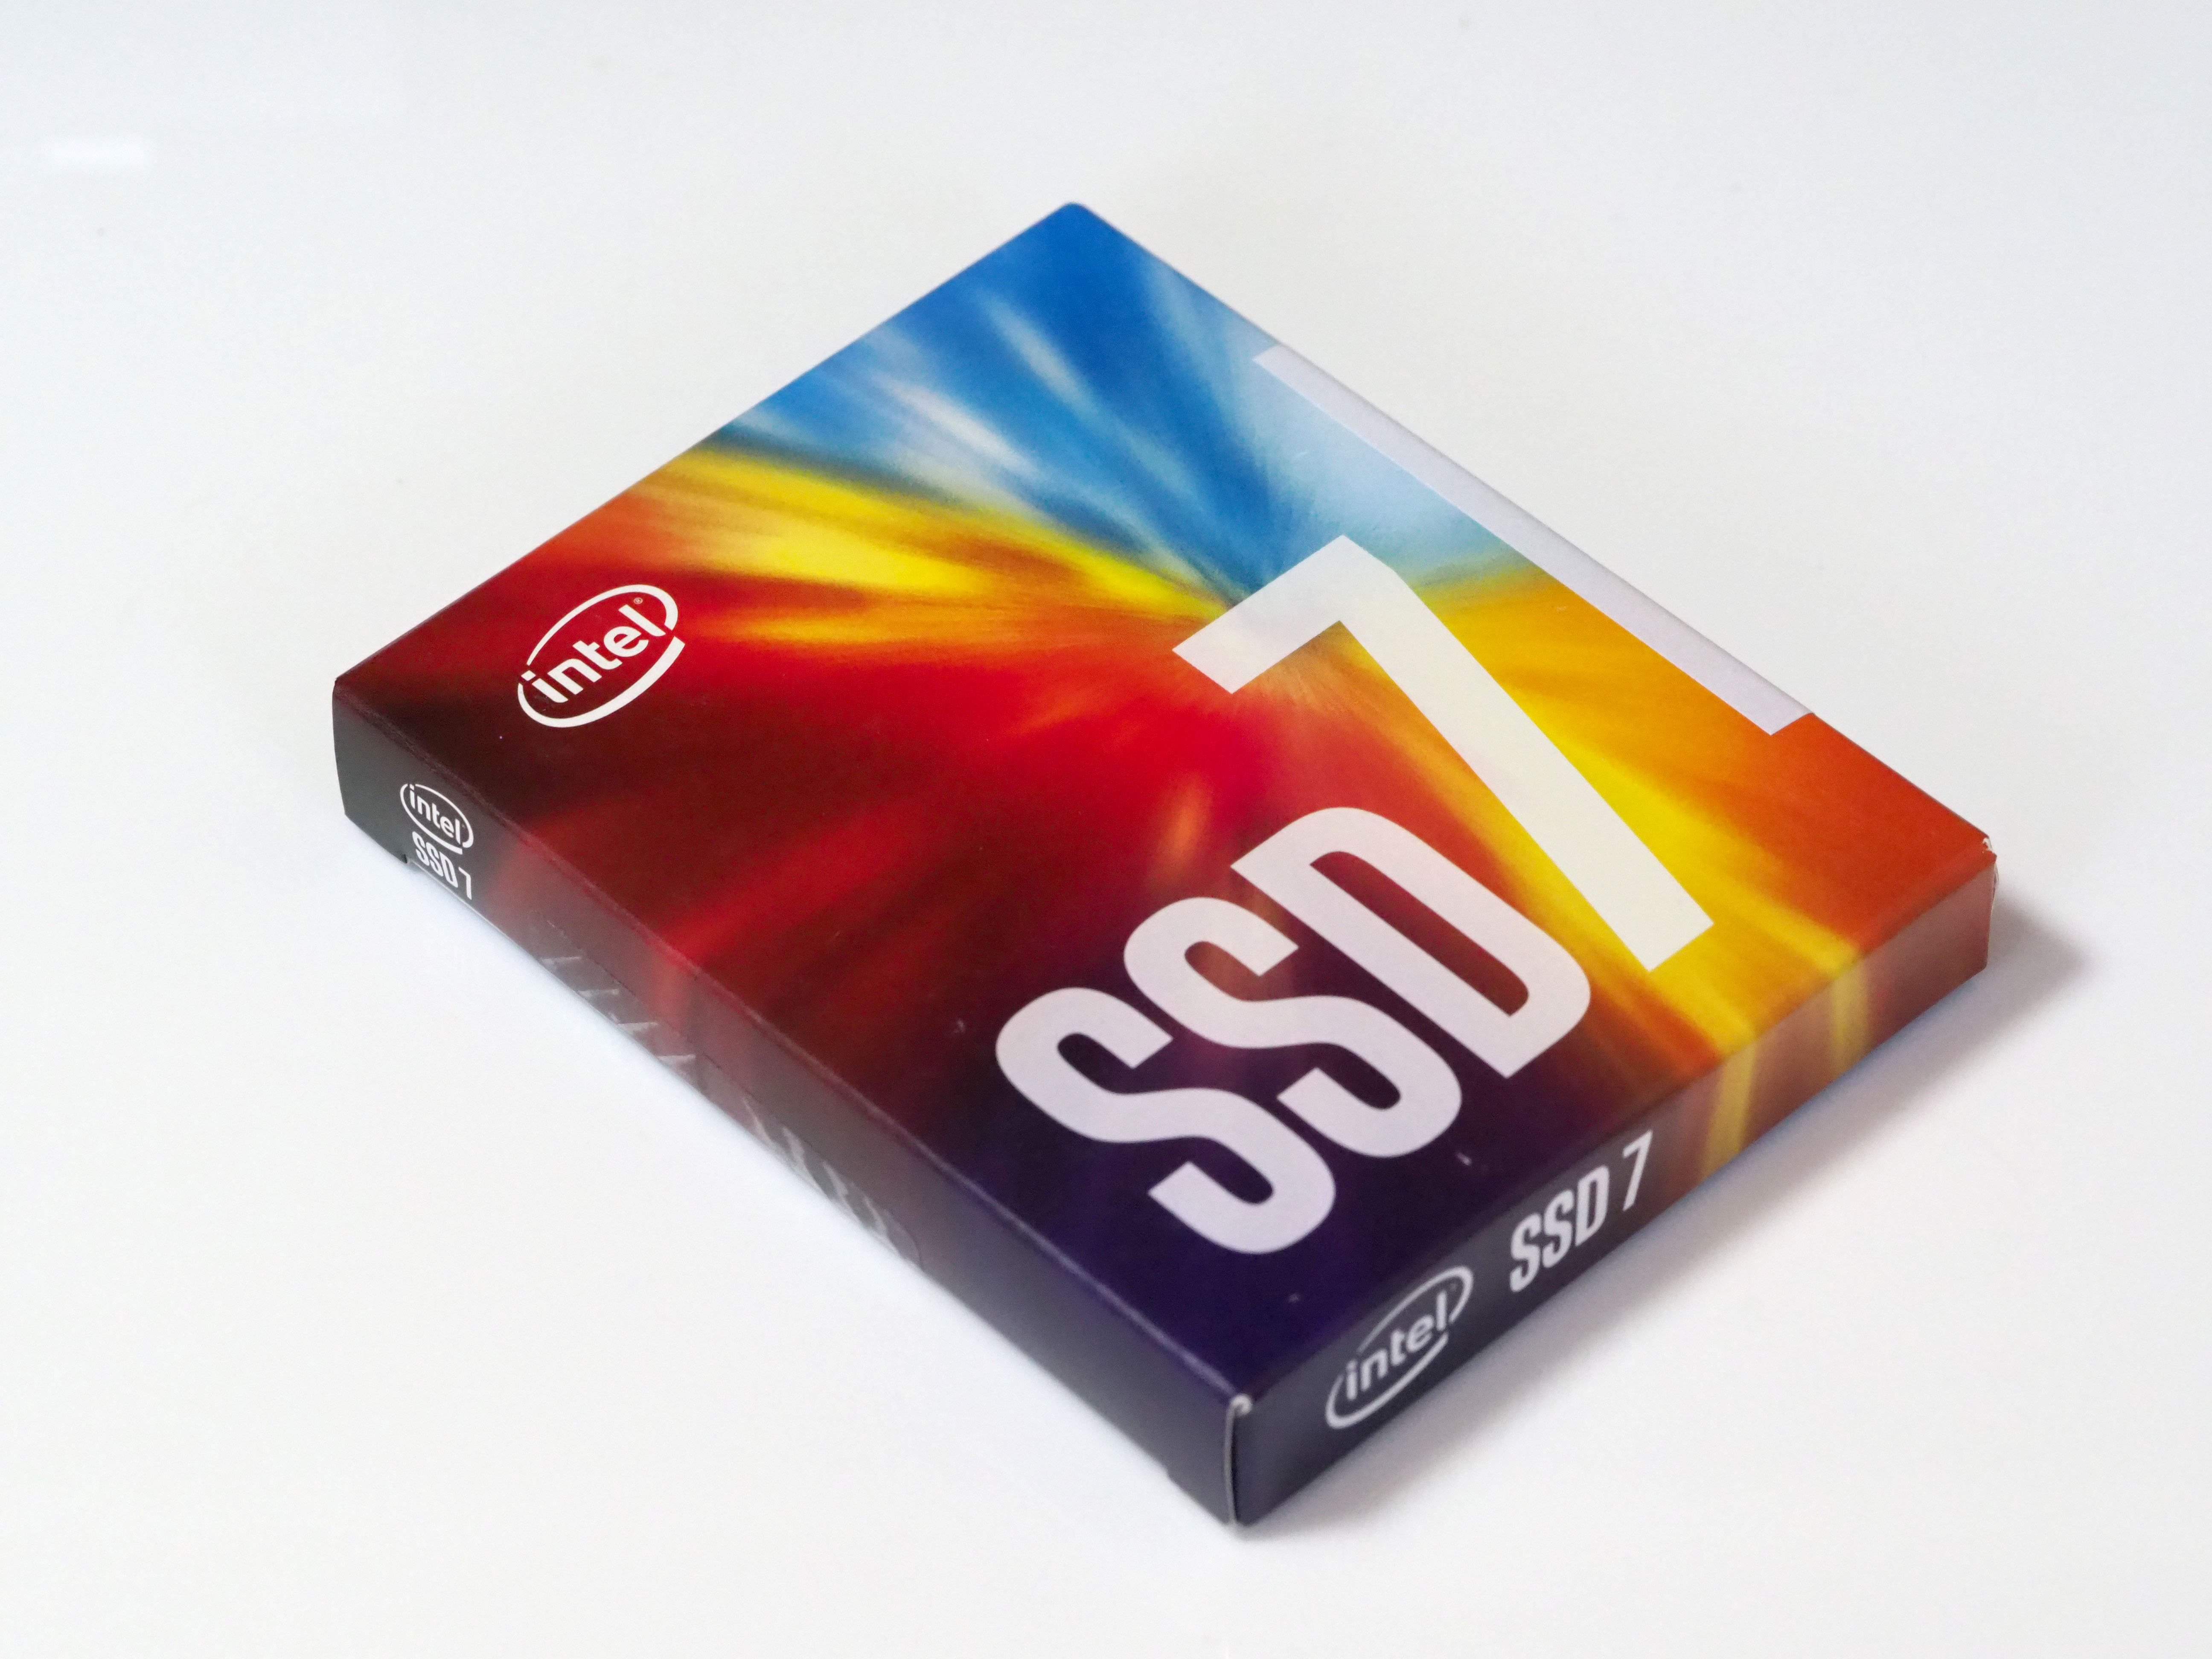 Intel SSD 760p M.2 PCIEx4 512GBモデル SSDPEKKW512G8XT のレビュー - 読み書きの速度と性能